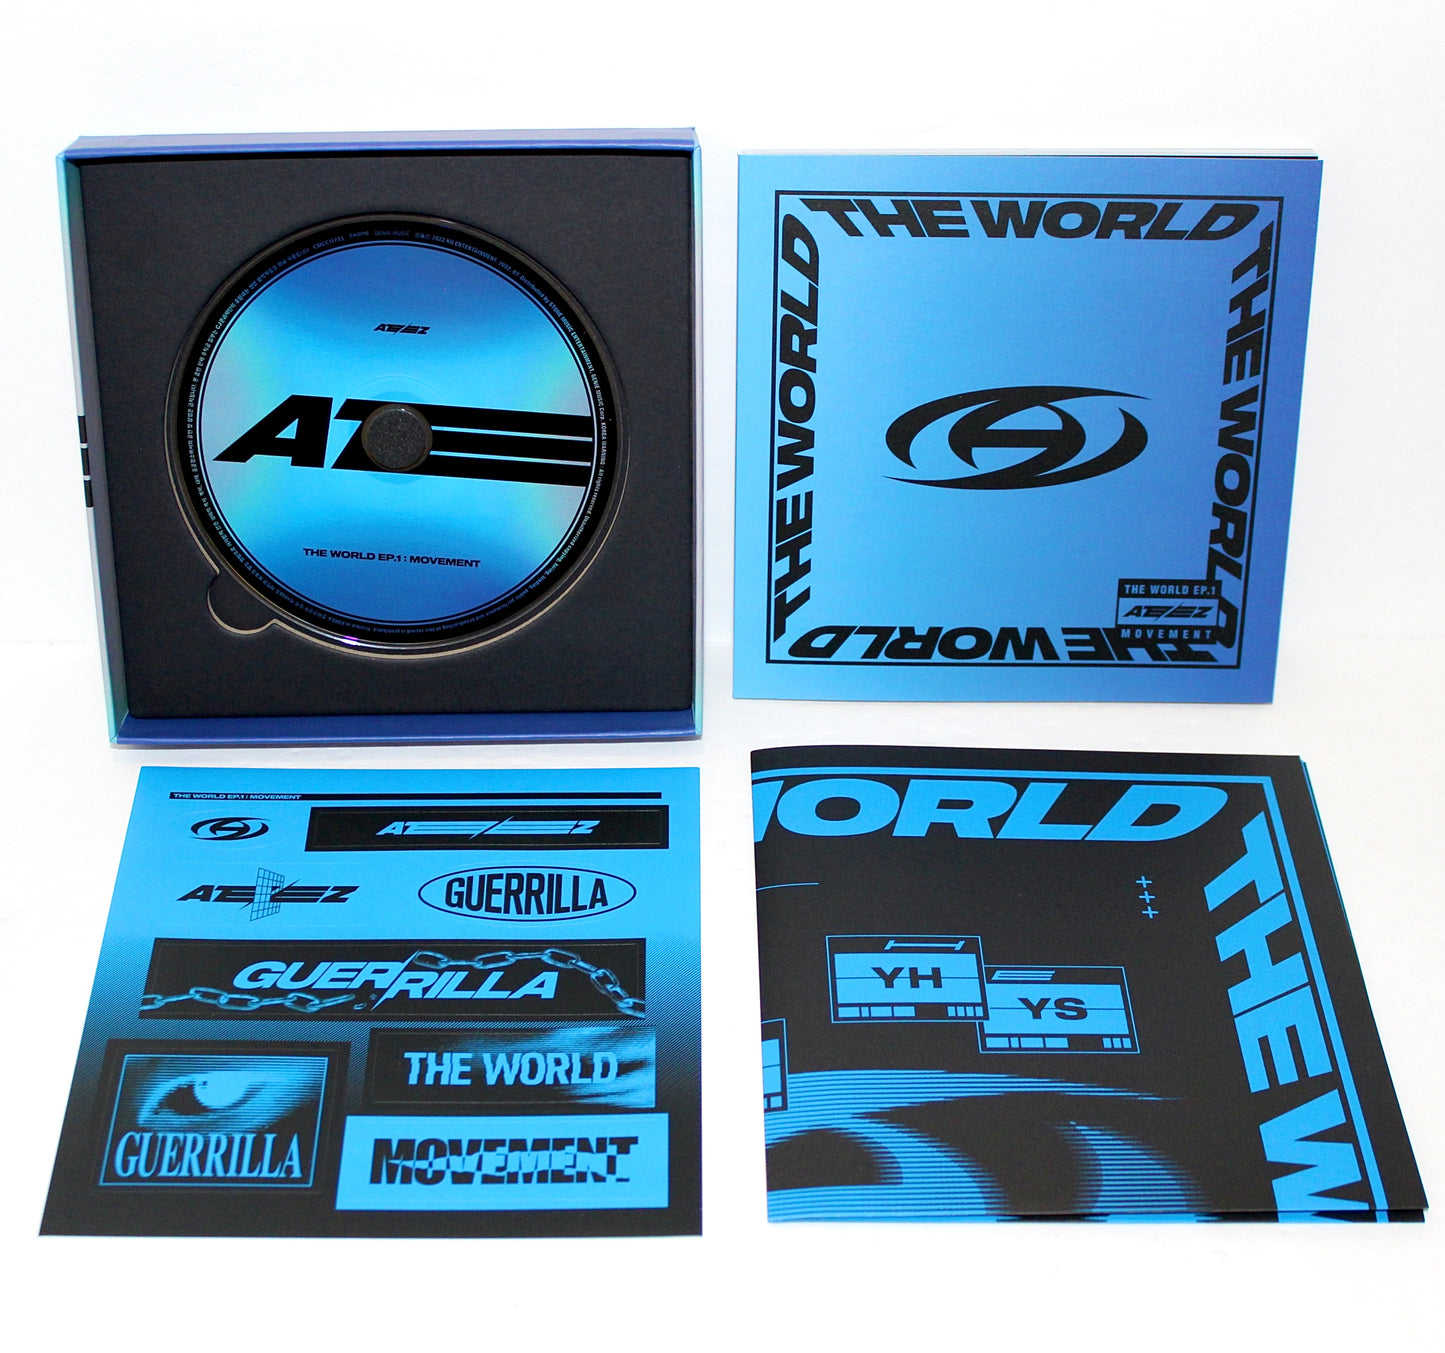 ATEEZ 9th Mini Album - THE WORLD EP.1 : MOVEMENT | A Ver.